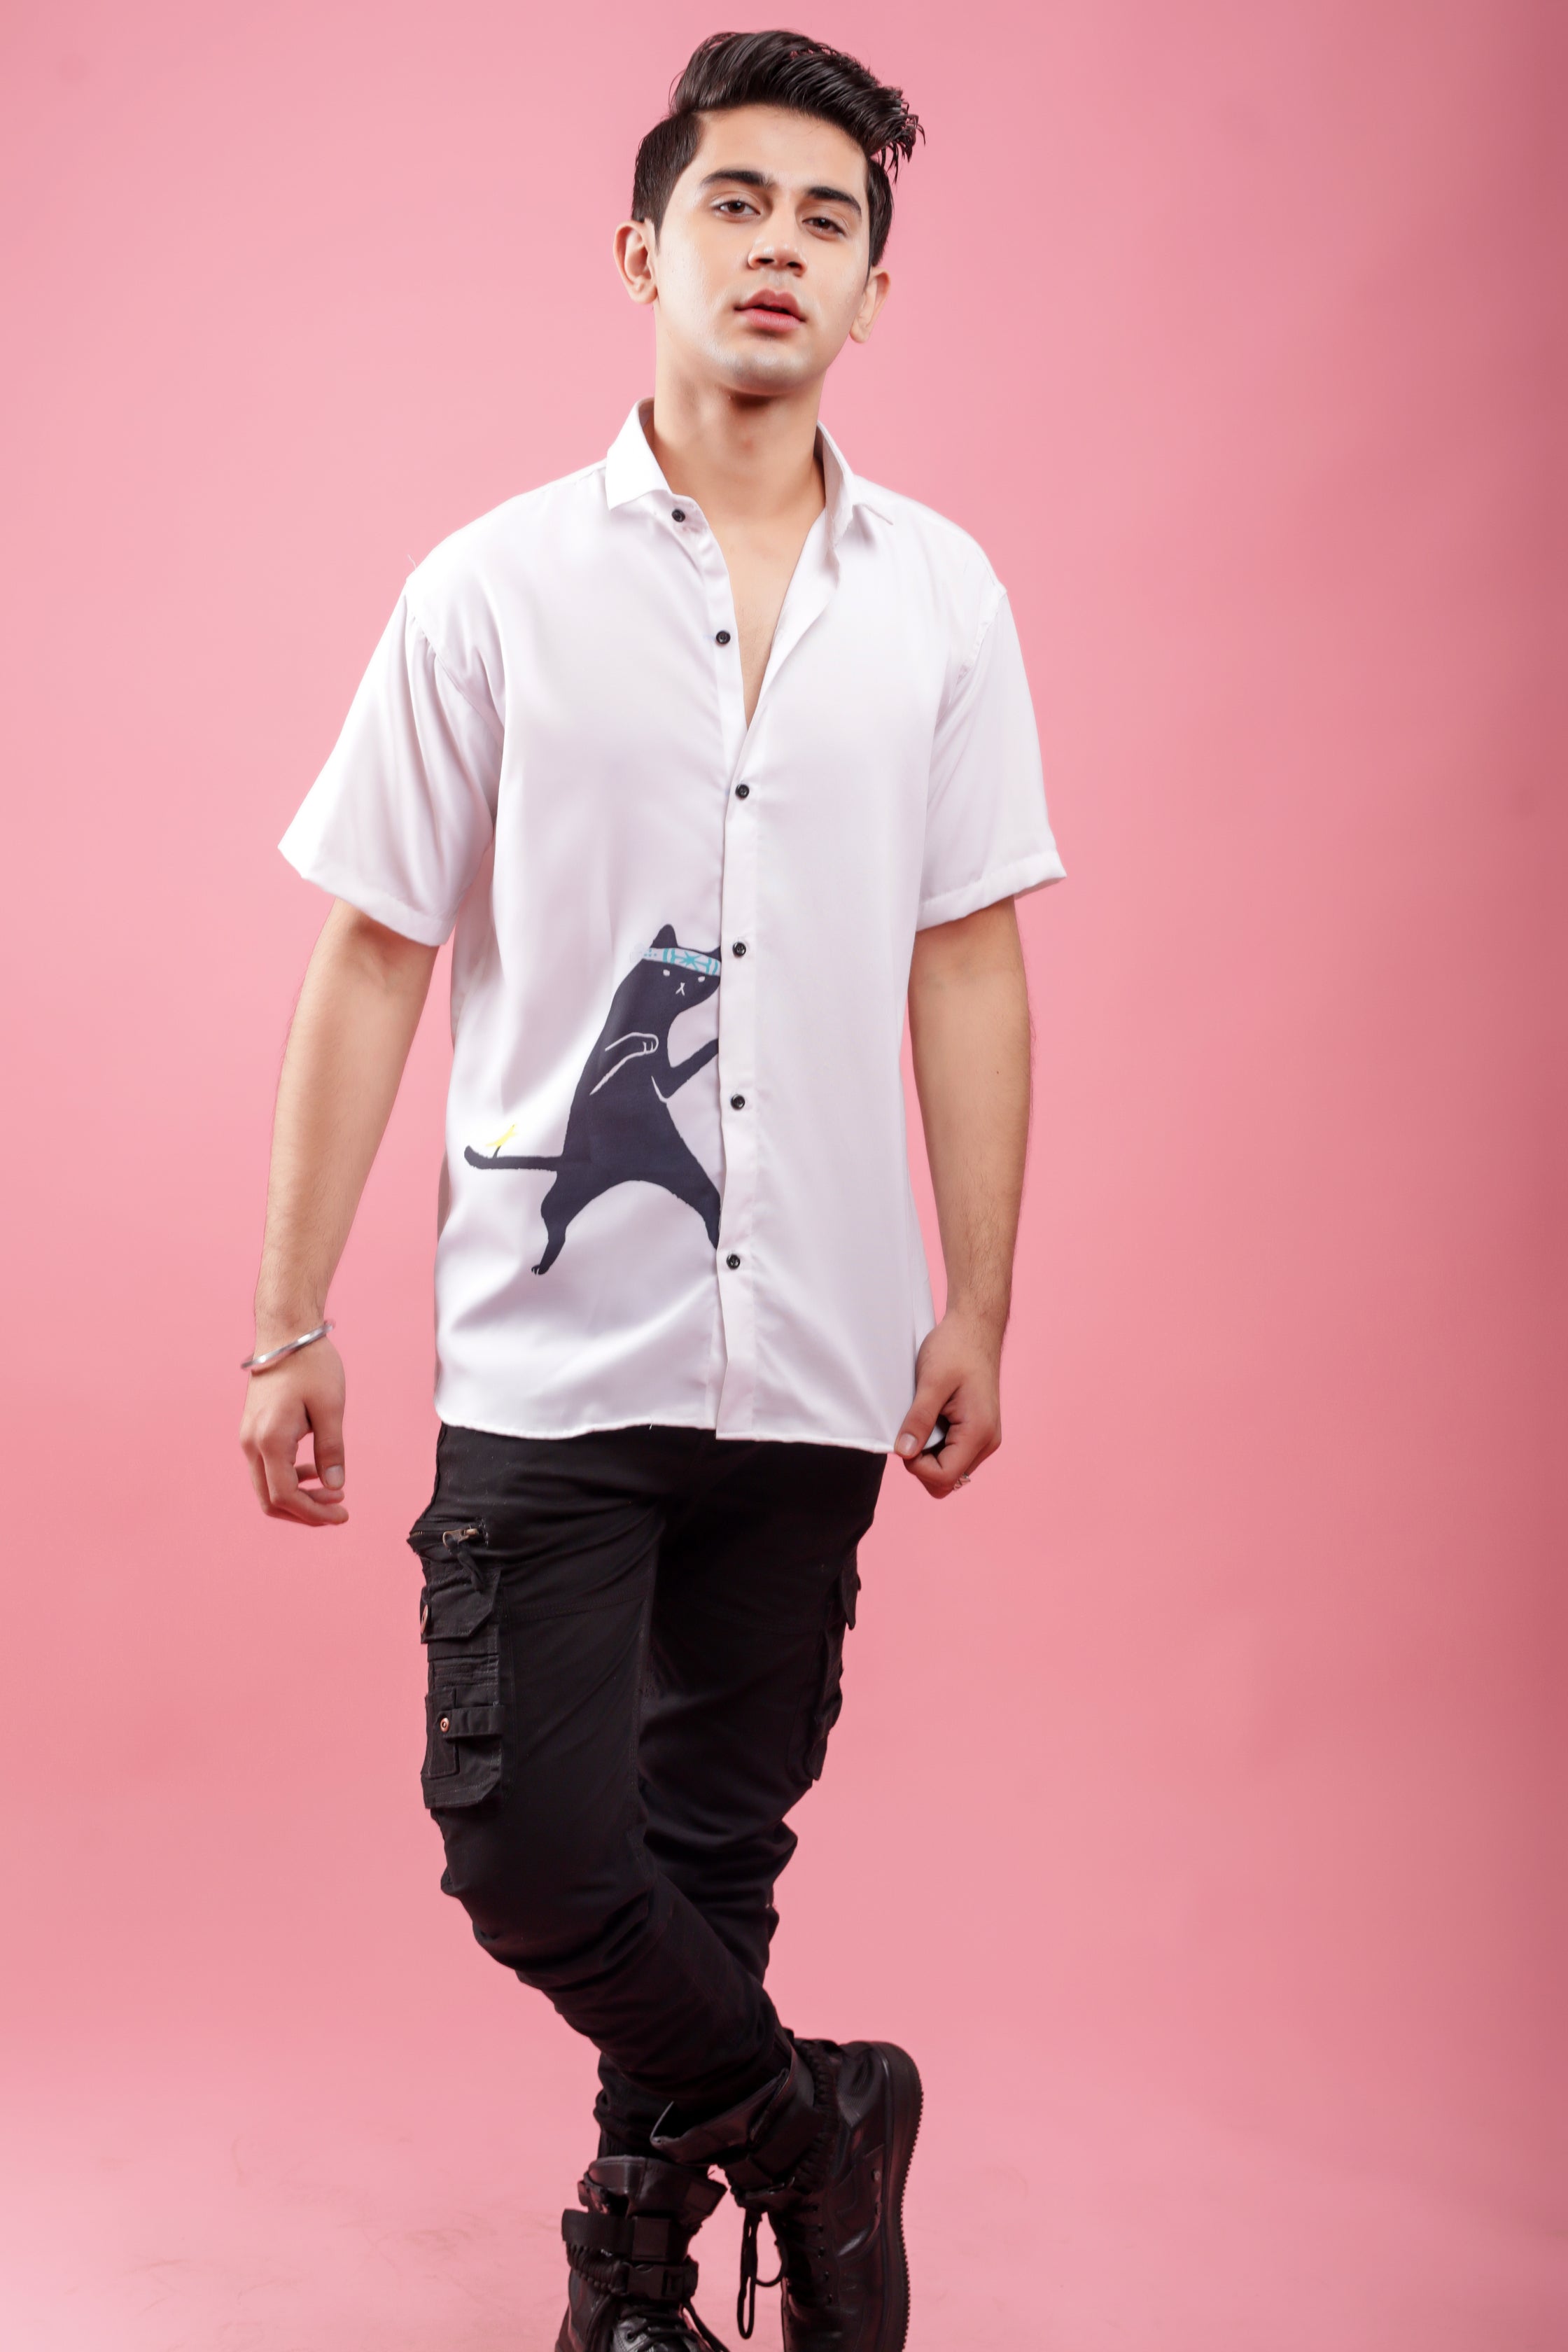 Cool Cat White Shirt shirts Damn Good By Mridul Madhok